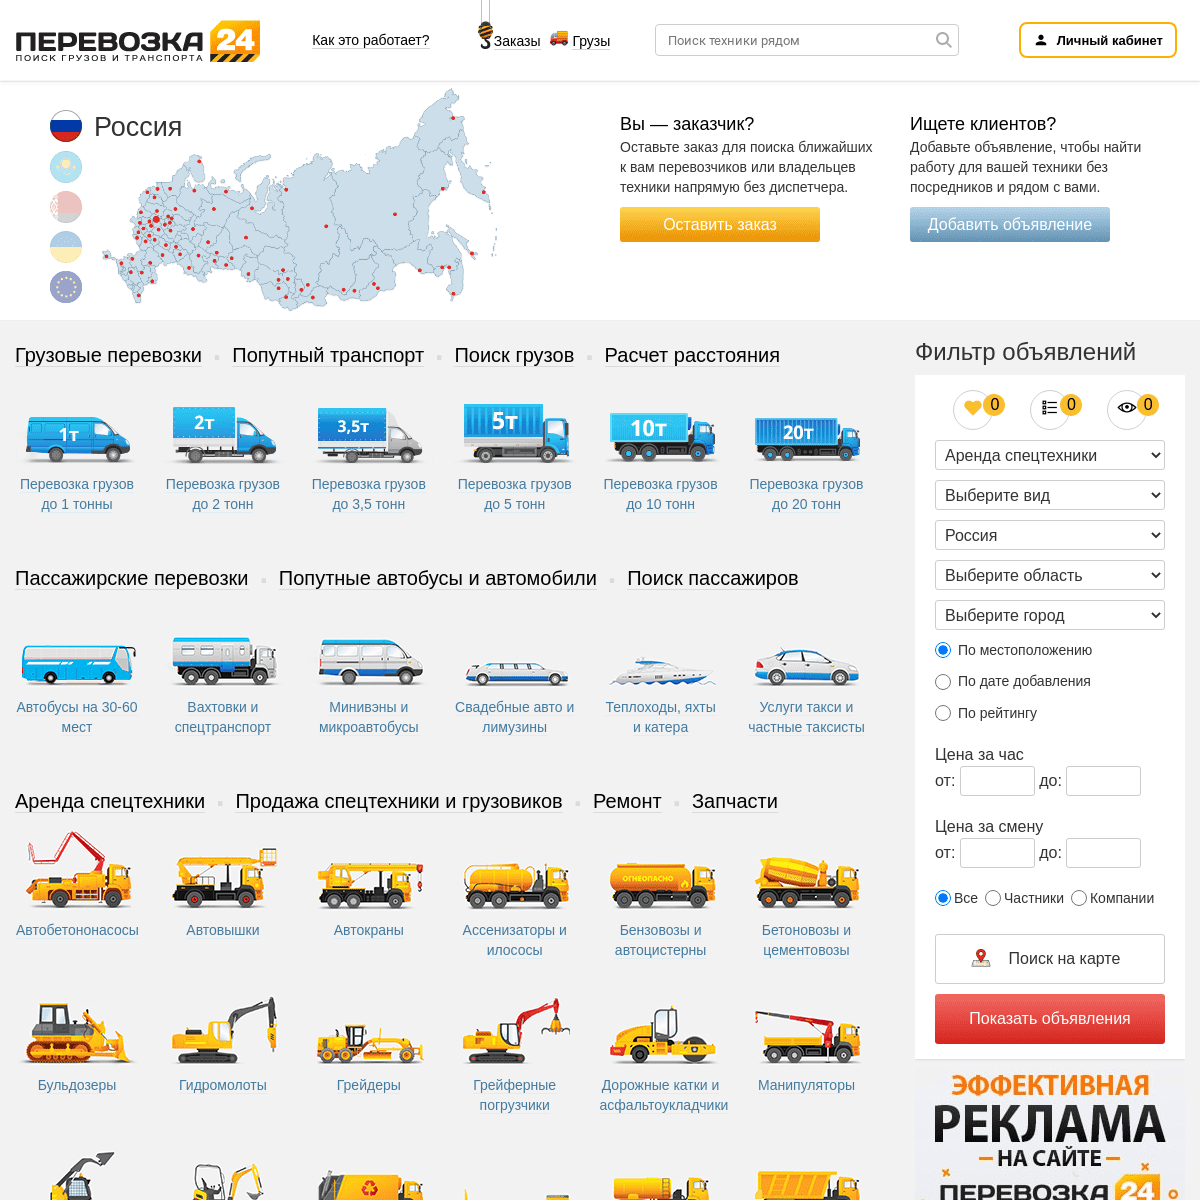 A complete backup of https://perevozka24.ru